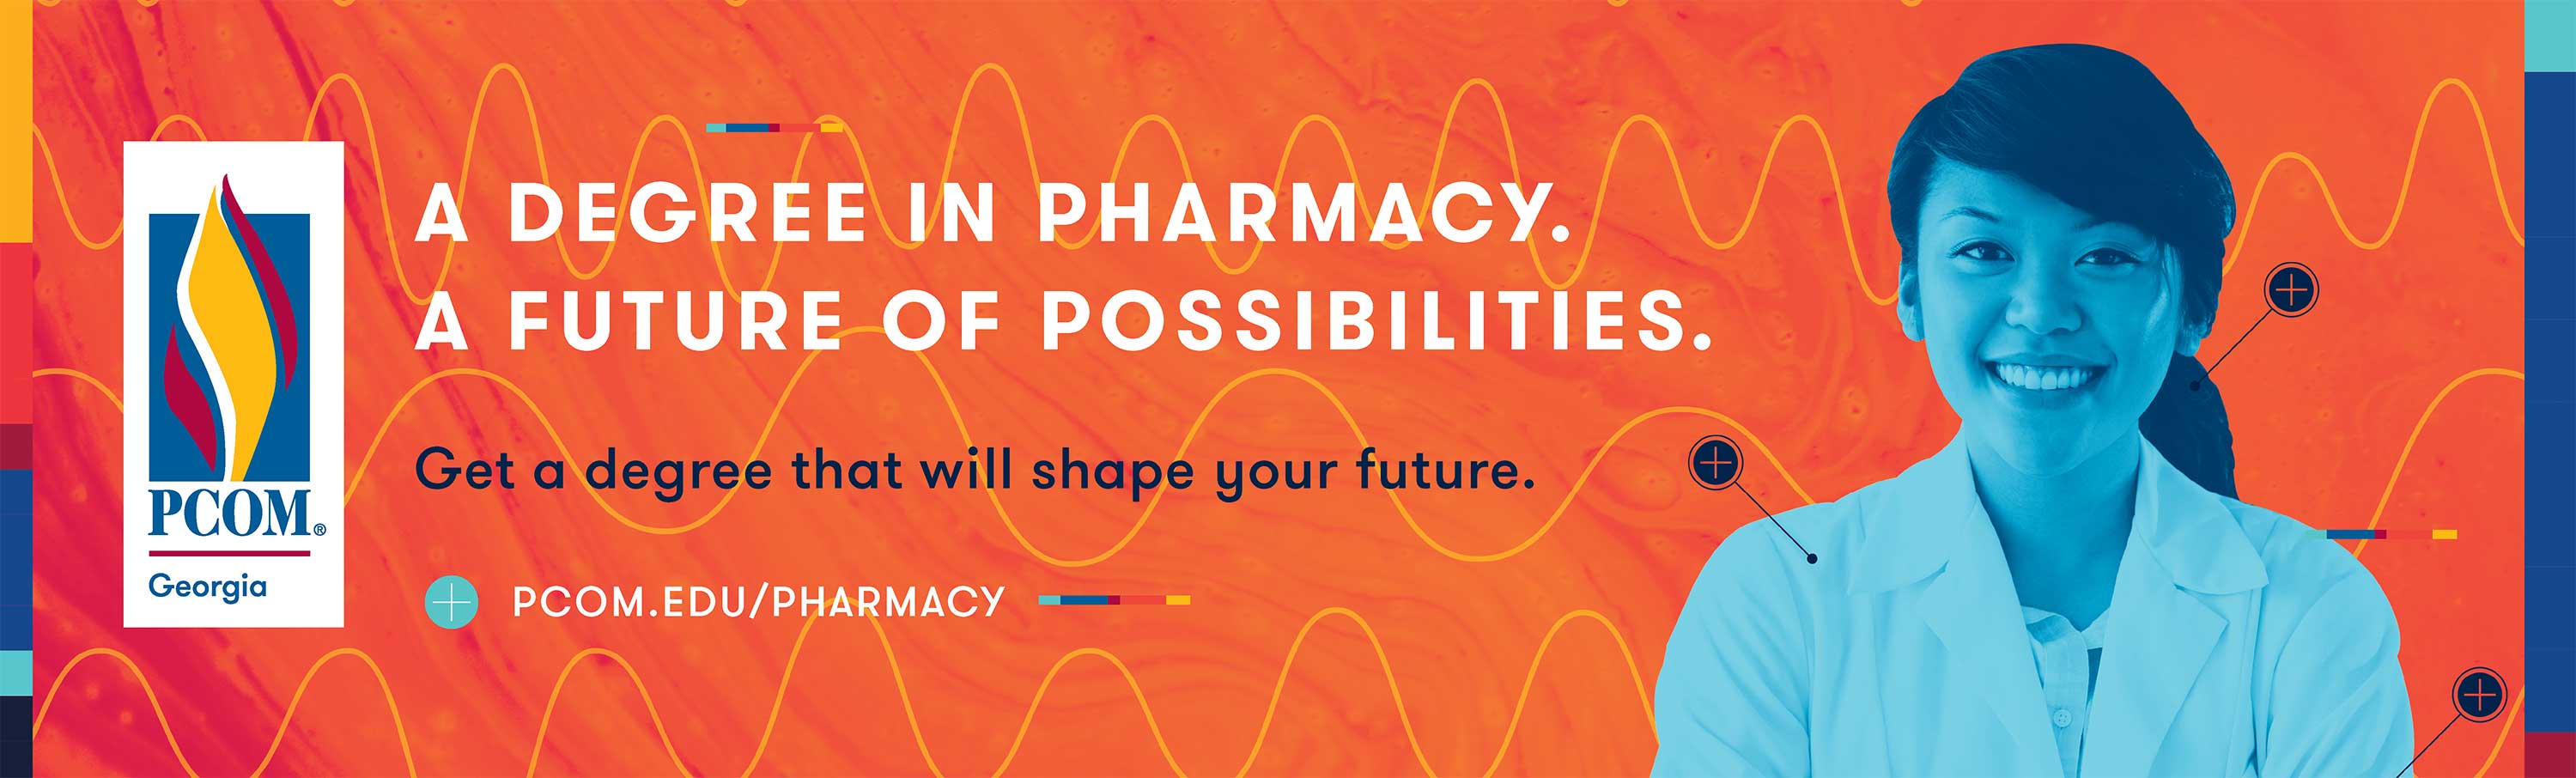 PCOM Georgia billboard "A Degree in Pharmacy. A Future in Possibilities."